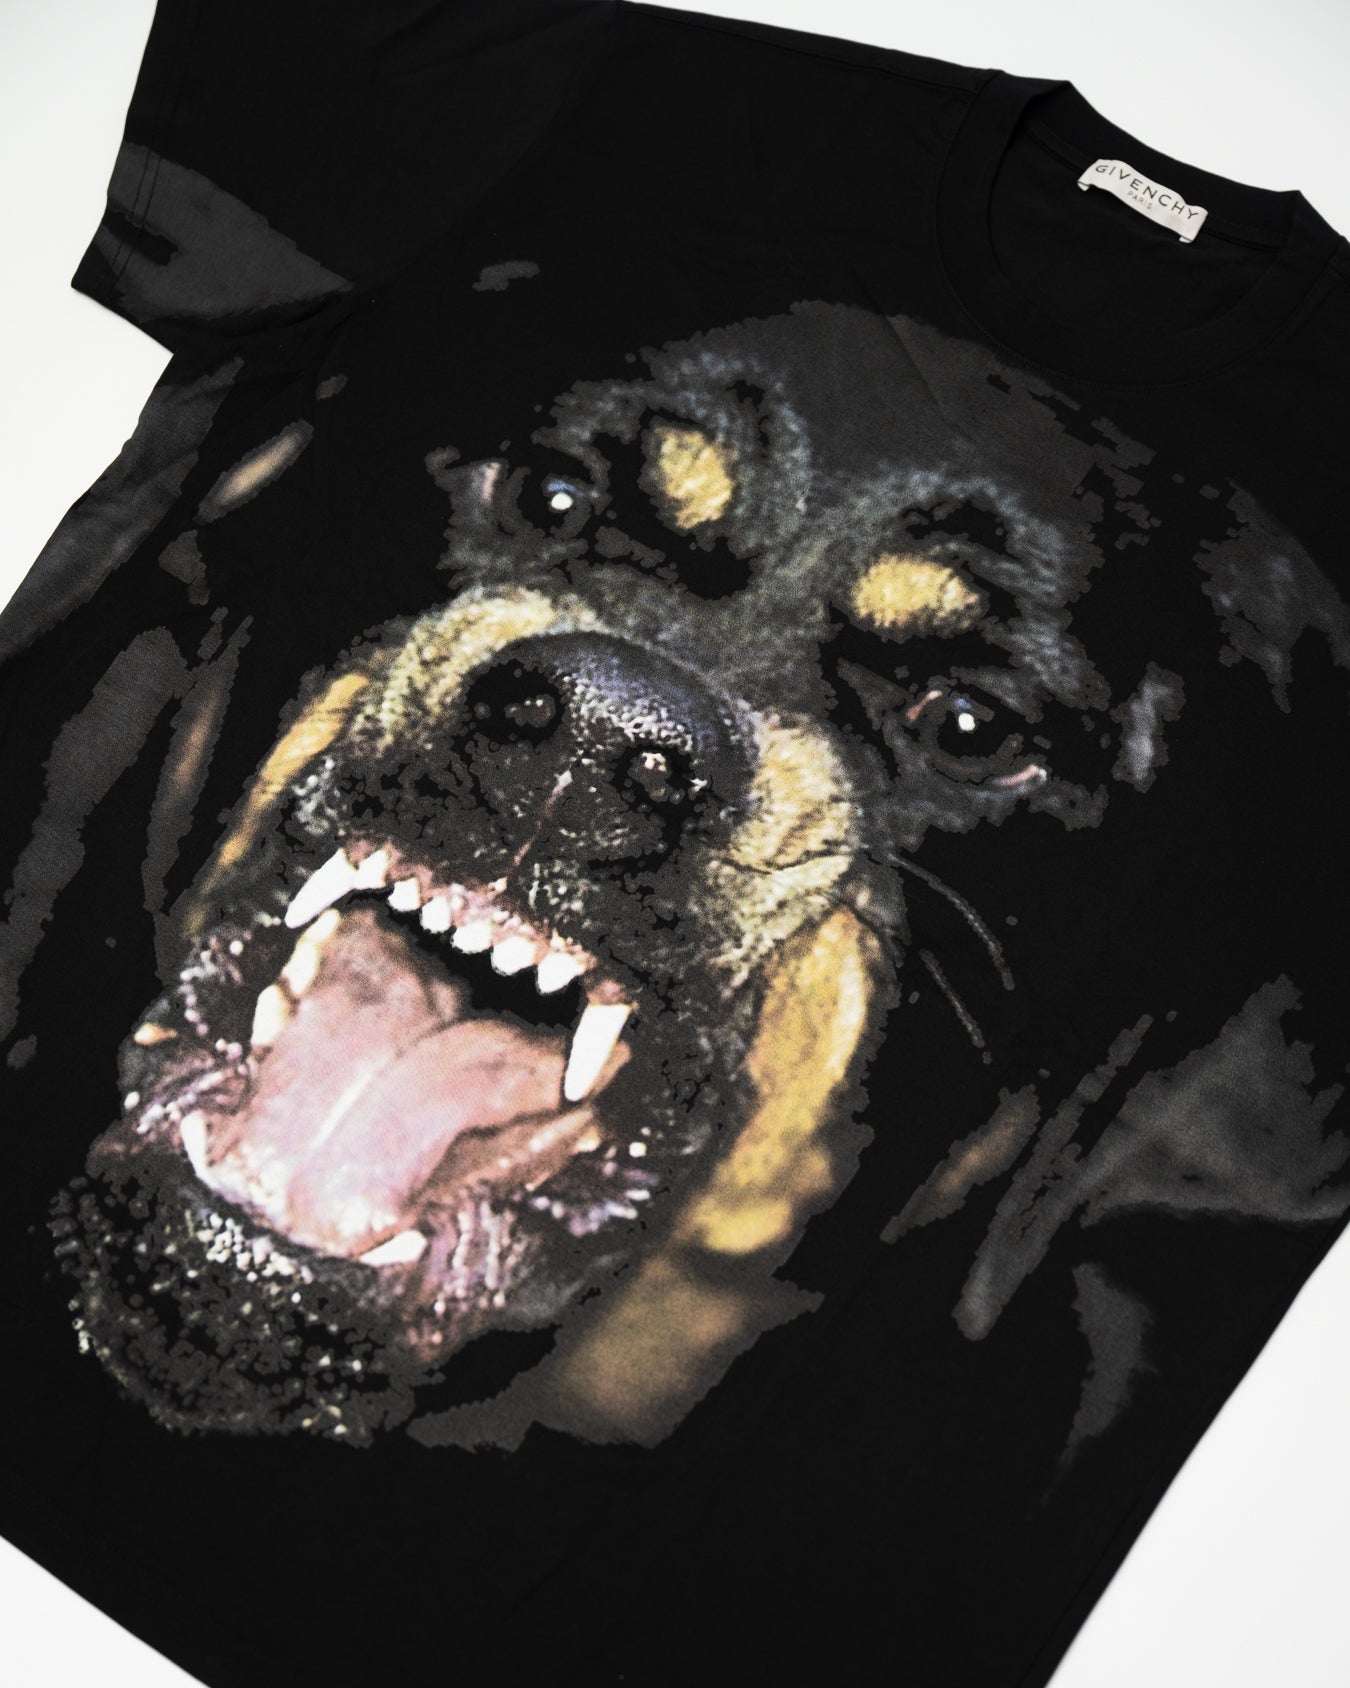 Givenchy Rottweiler Print T-Shirt